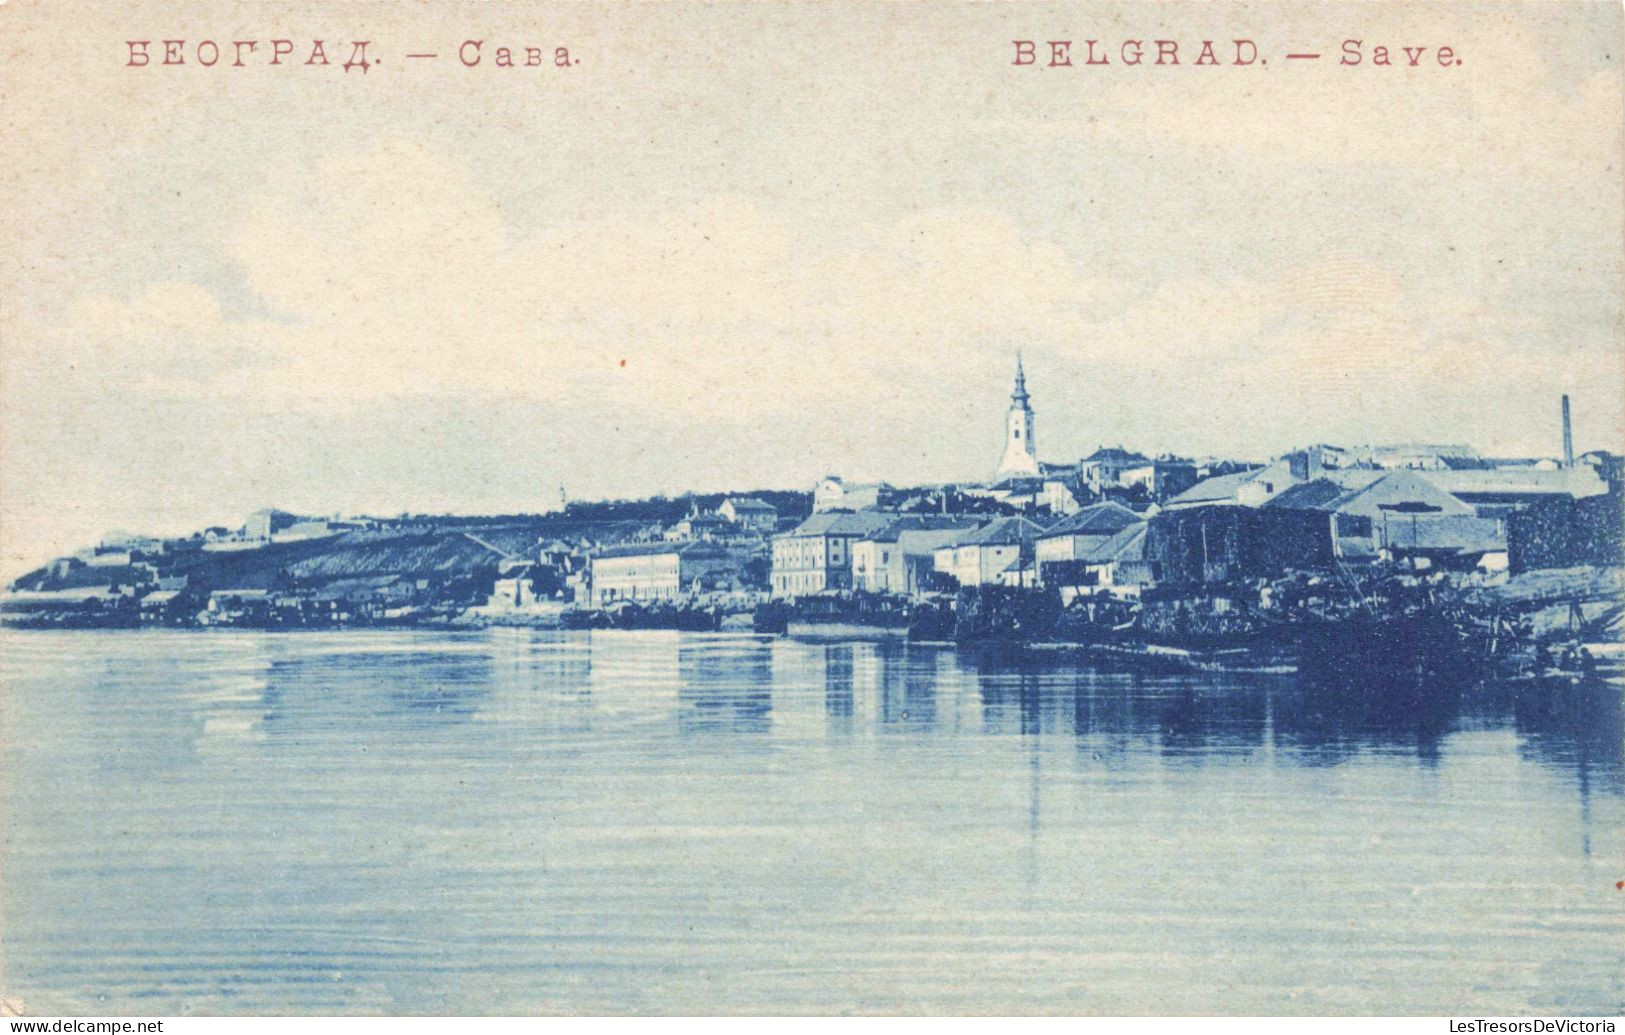 Serbie - Belgarde - Save - Mer - Panorama De La Côte - Carte Postale Ancienne - Serbie